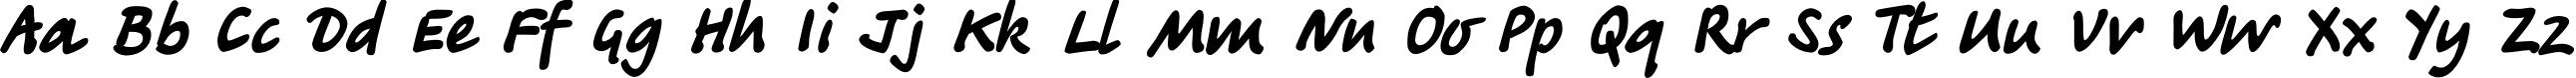 Пример написания английского алфавита шрифтом TatianaC